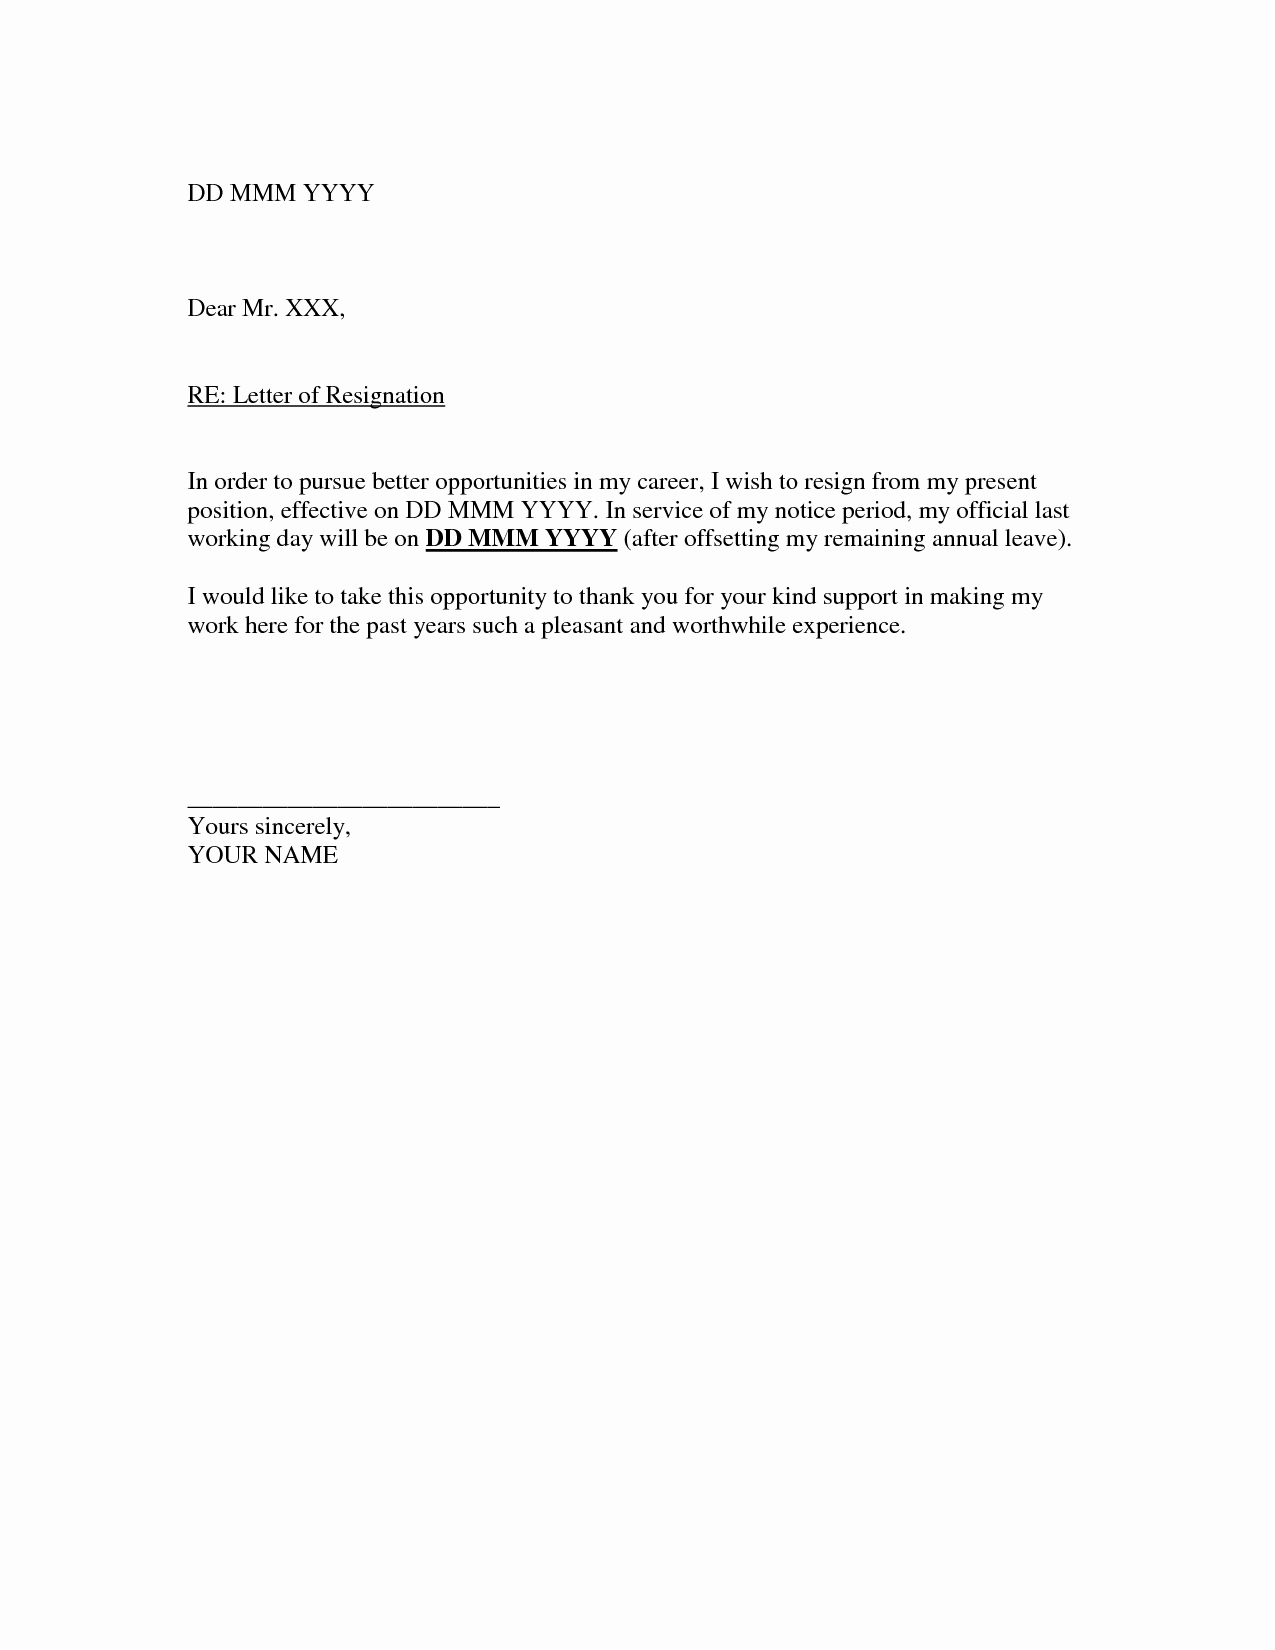 Formal Resignation Letter Samples New Related to Resignation Letter Template Letters Of